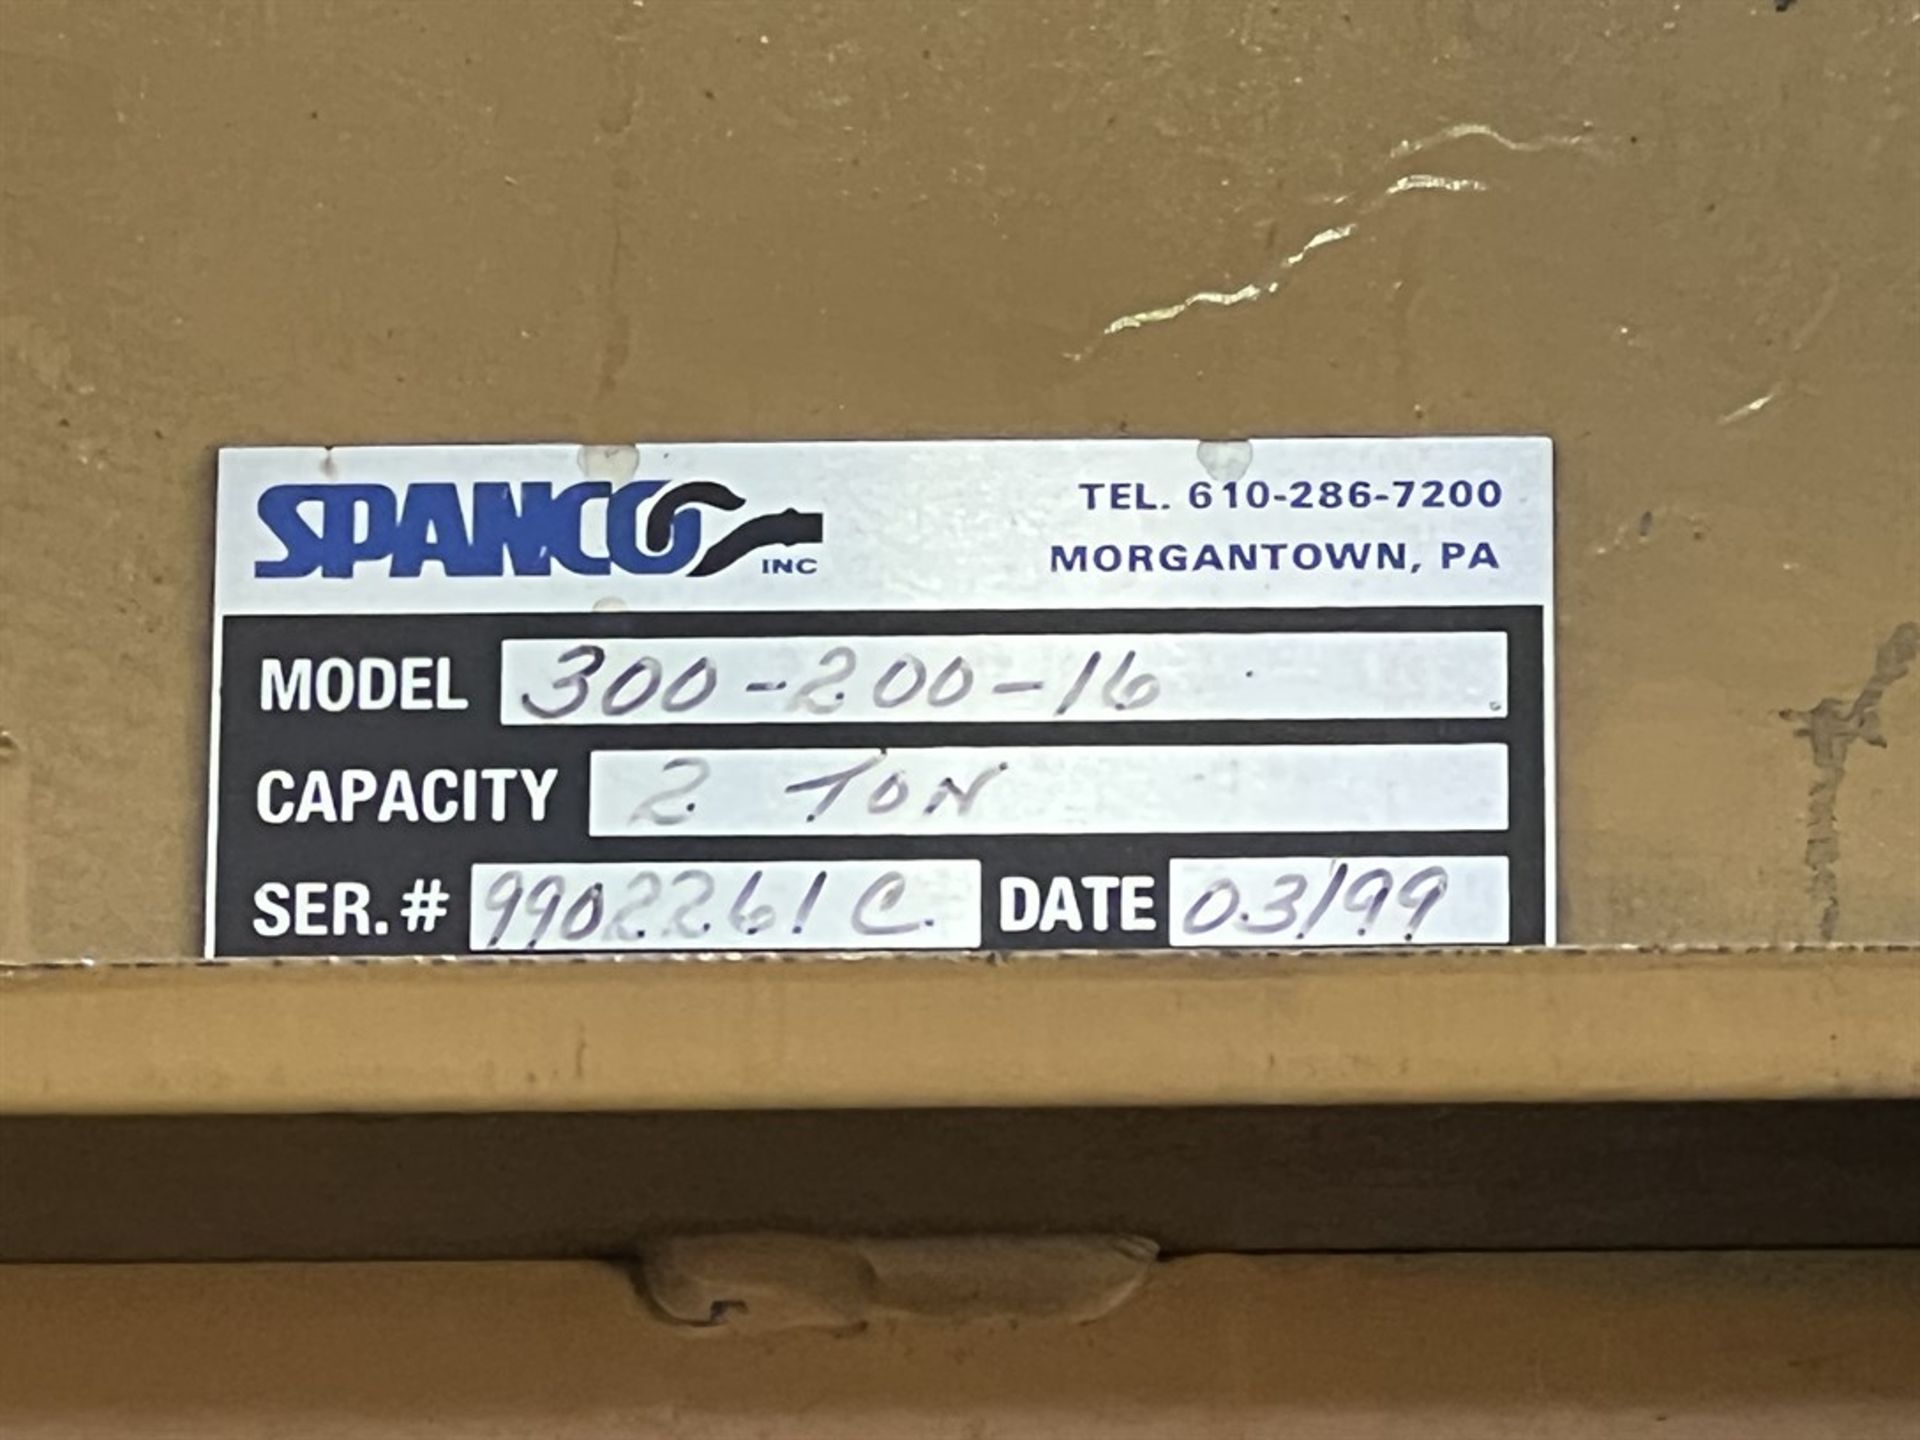 SPANCO 300-200-16 Girder Mounted Jib Crane, s/n 9902261C, 2-Ton Capacity, Ingersoll Rand Pneumatic - Image 3 of 4